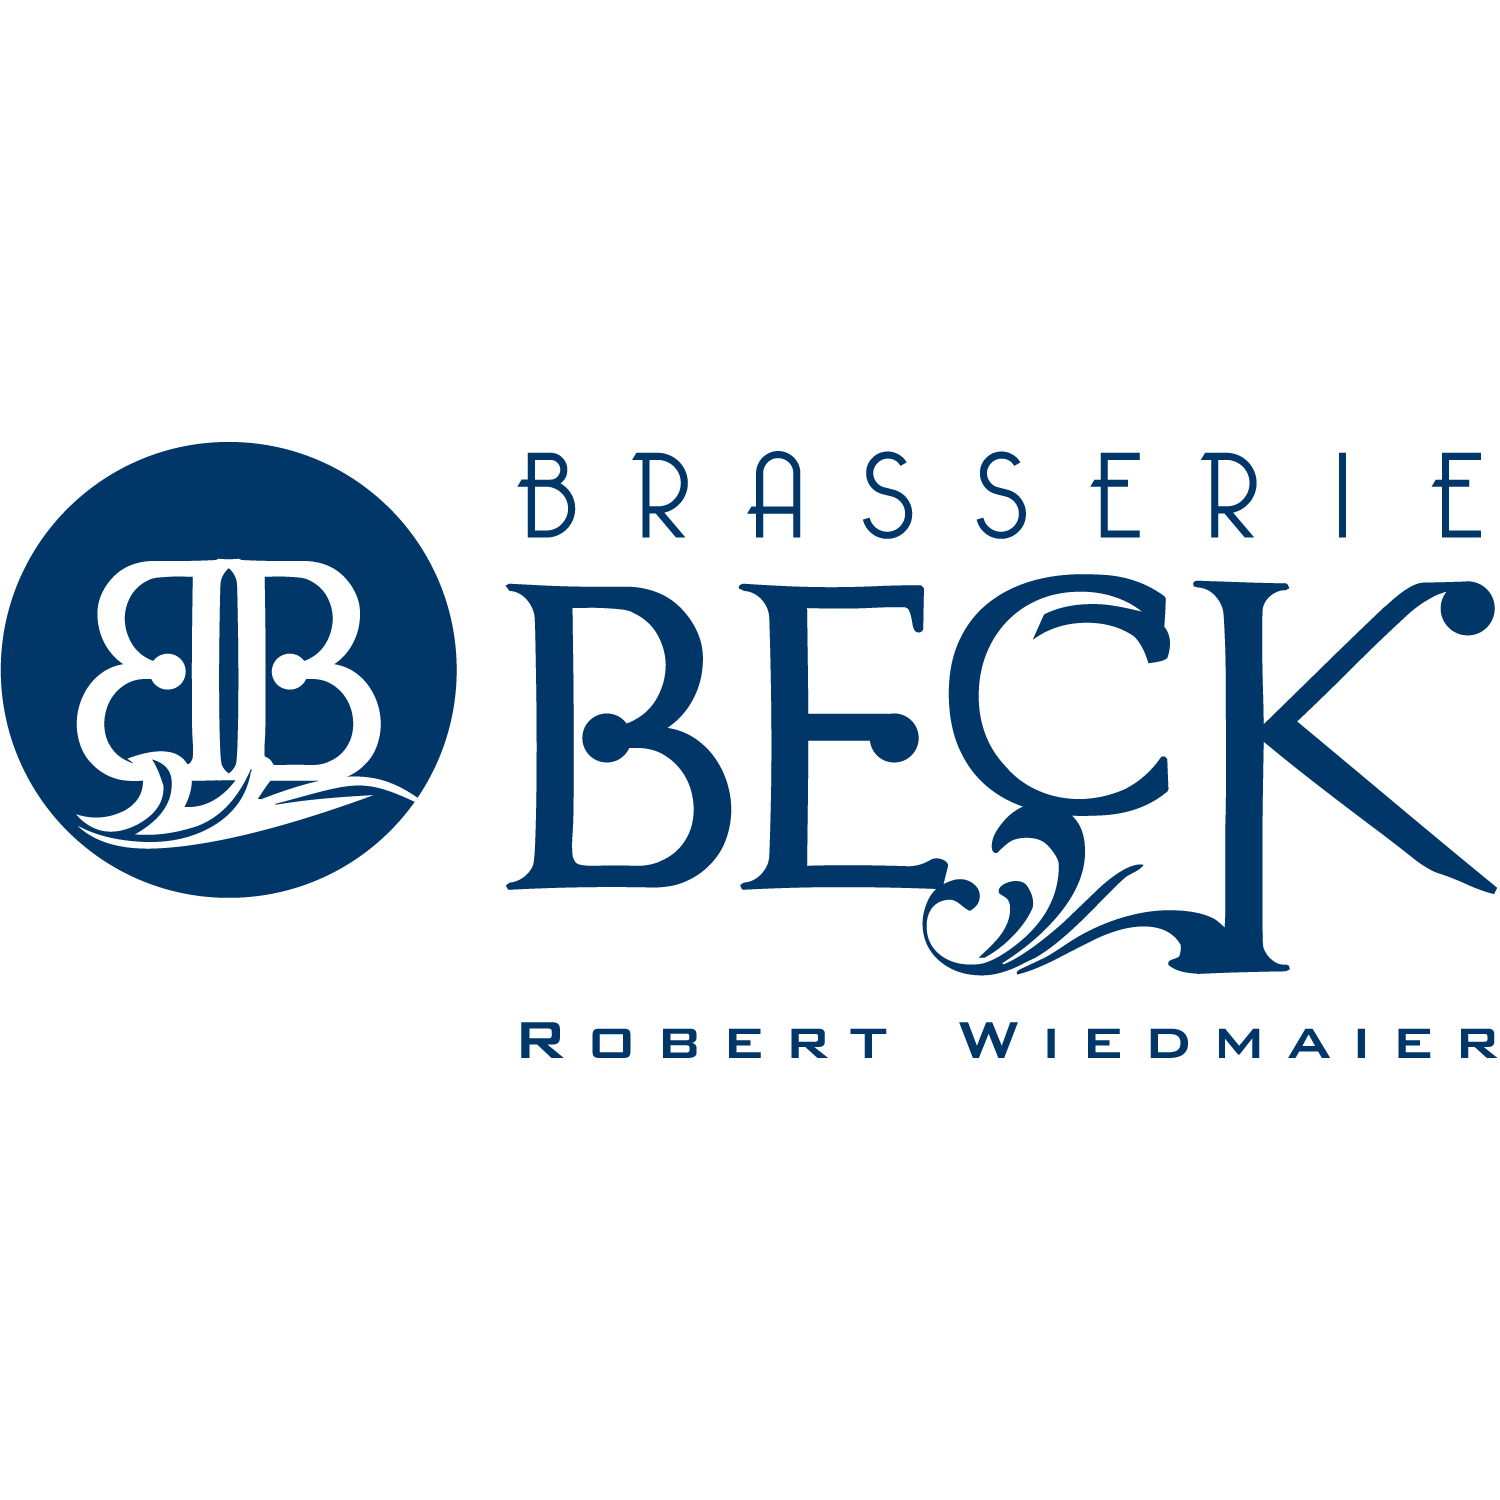 Beck Logo - About Brasserie Beck Washington DC